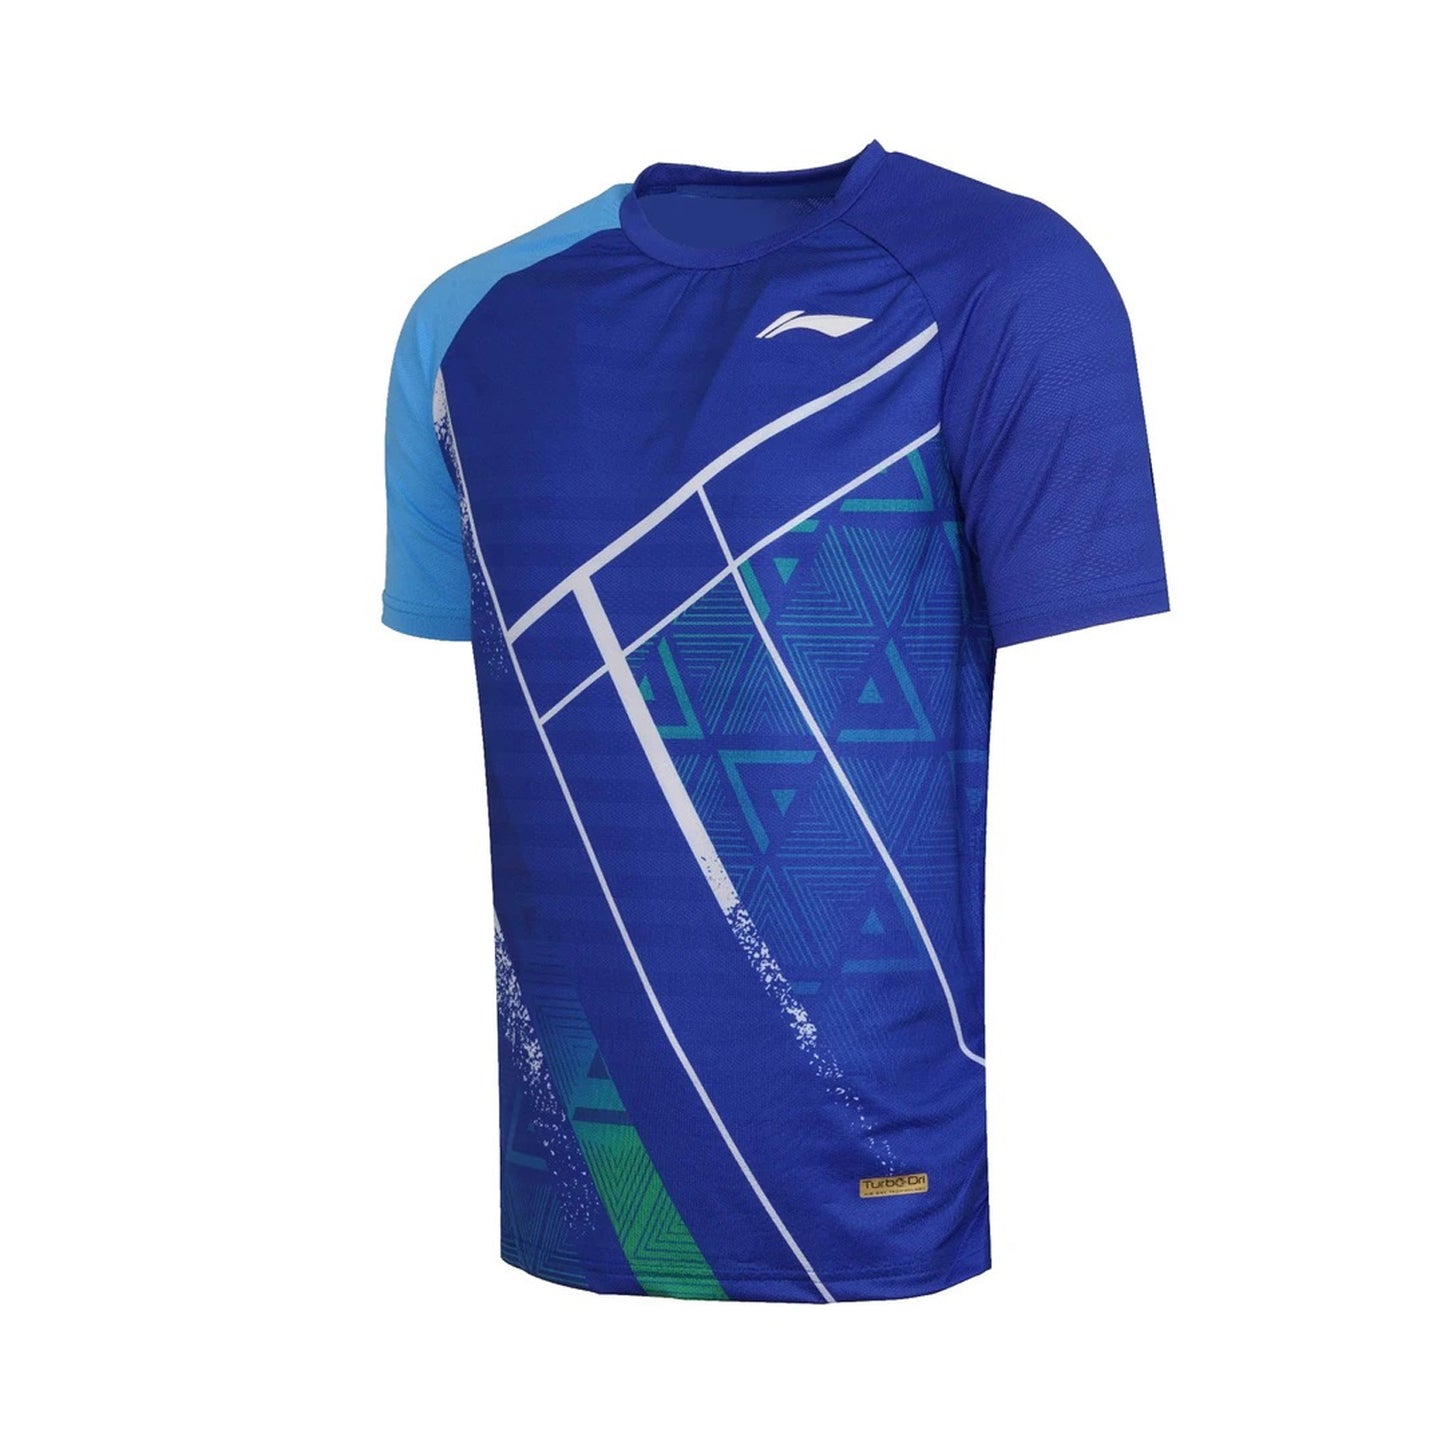 Li-Ning ATSSA01 Round Neck Badminton Tshirt, Navy - Best Price online Prokicksports.com